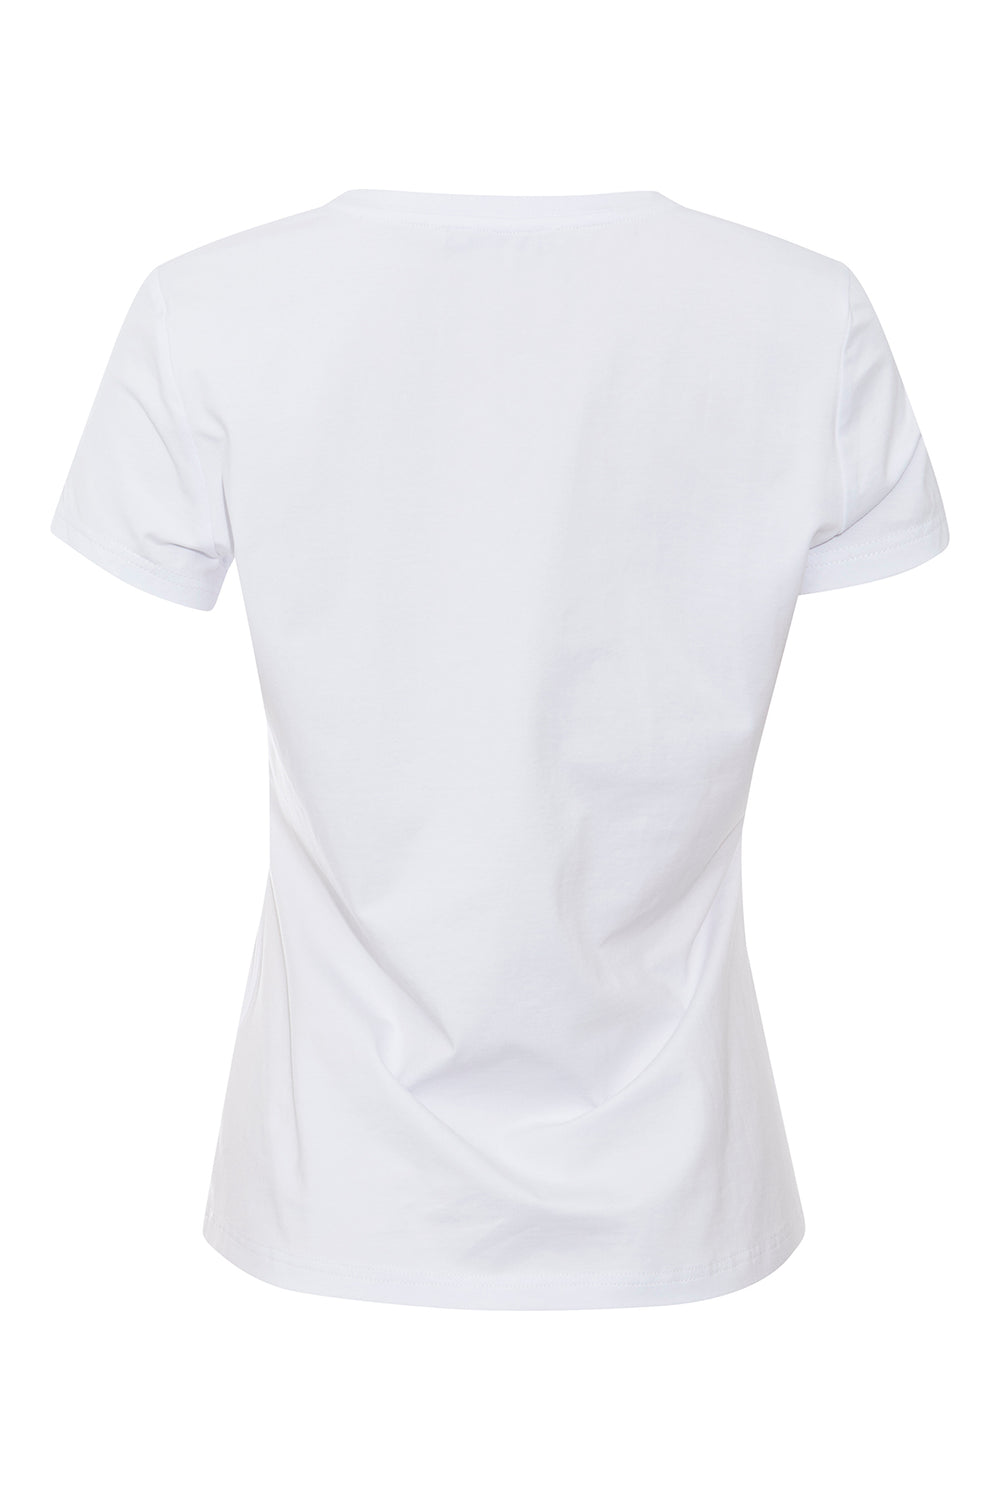 PBO Domos T-shirt T-SHIRTS 01 White